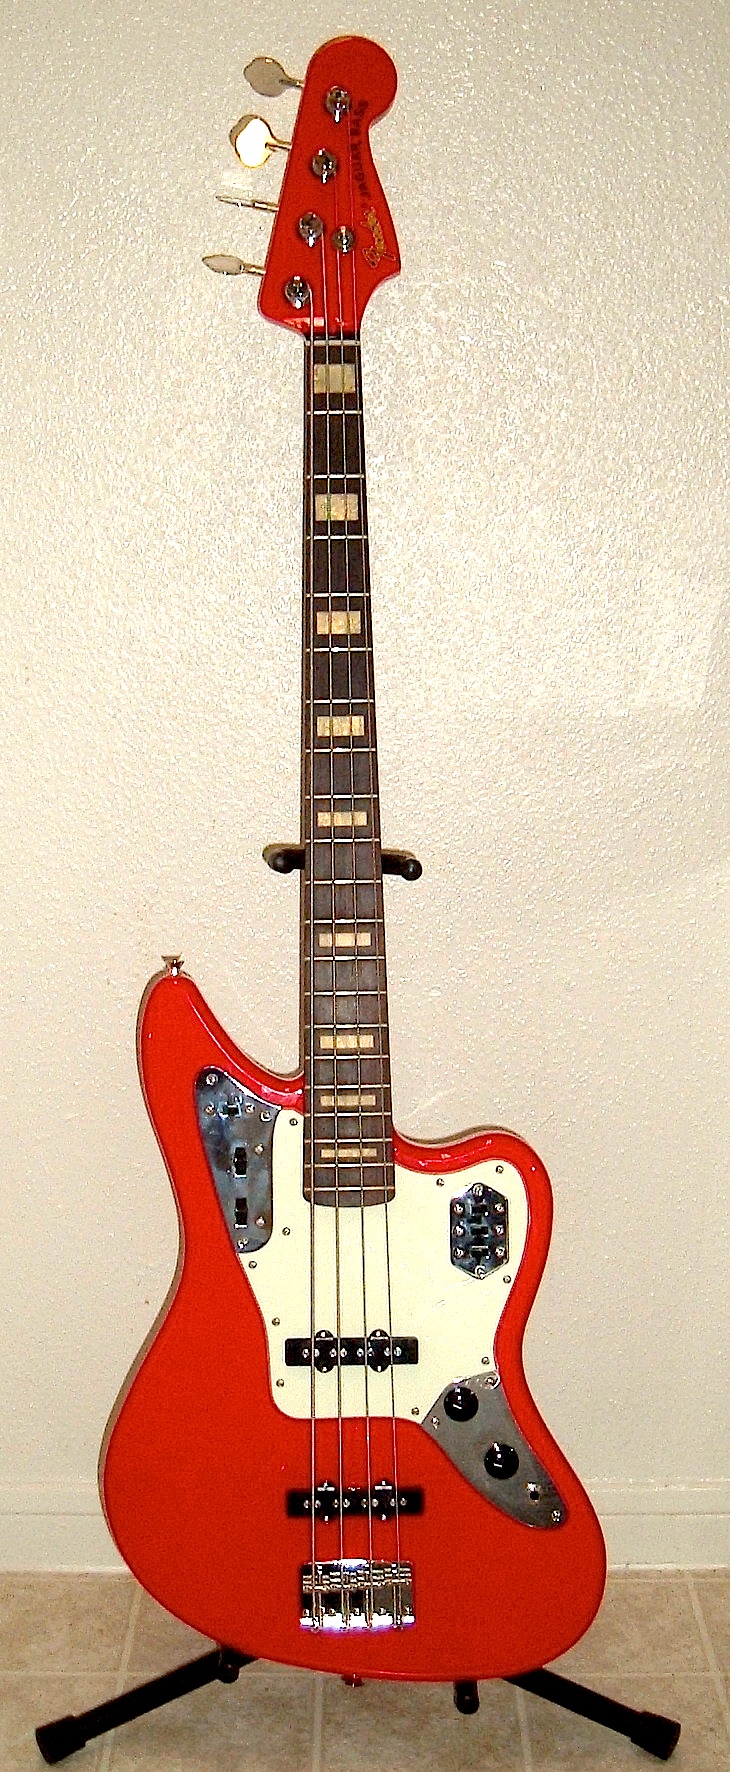 Fender_Jaguar_Bass_front.jpg